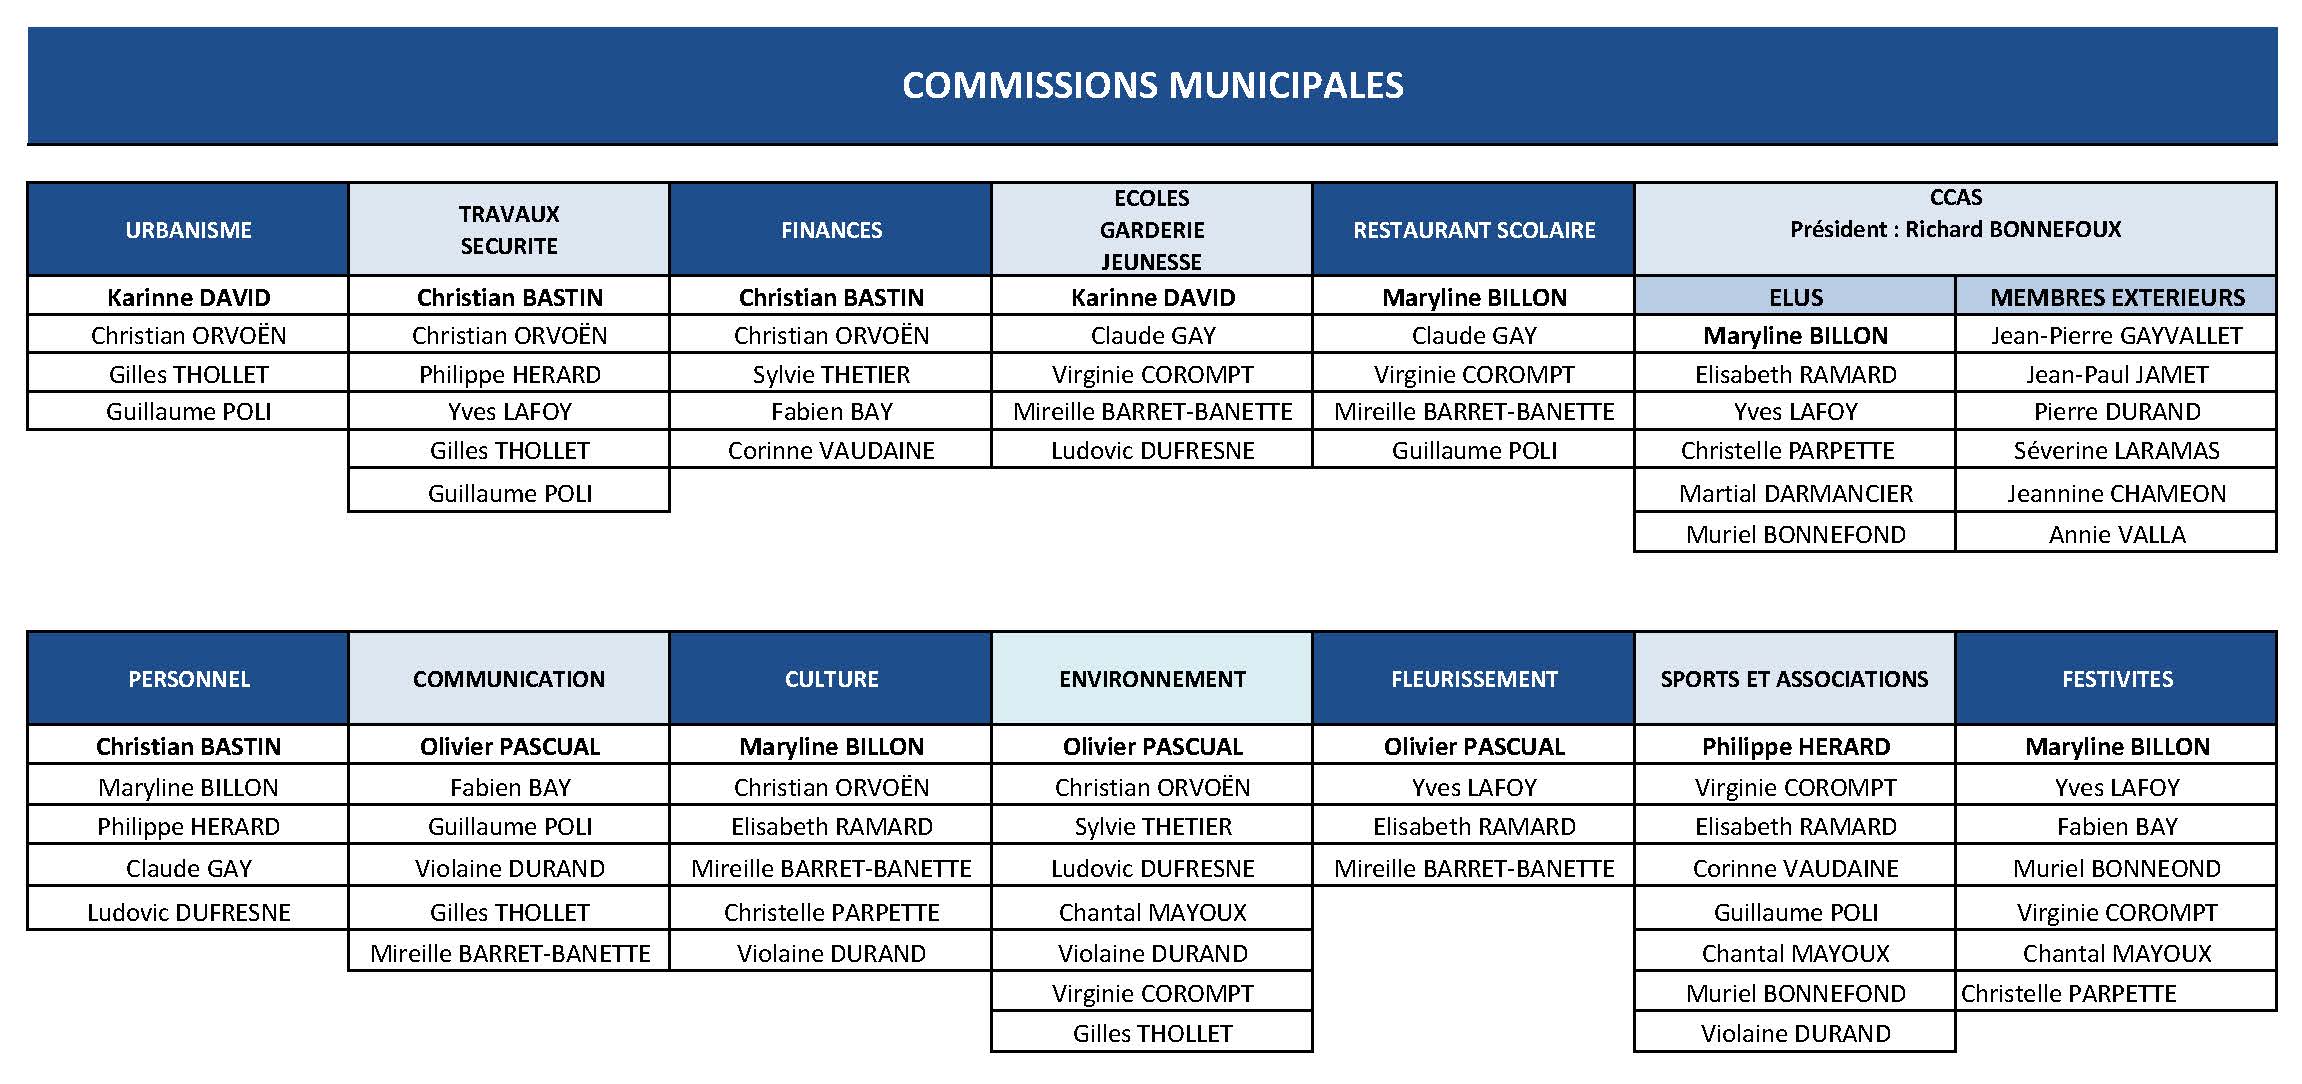 commissions-conseil-municipal-2020-2026.jpg